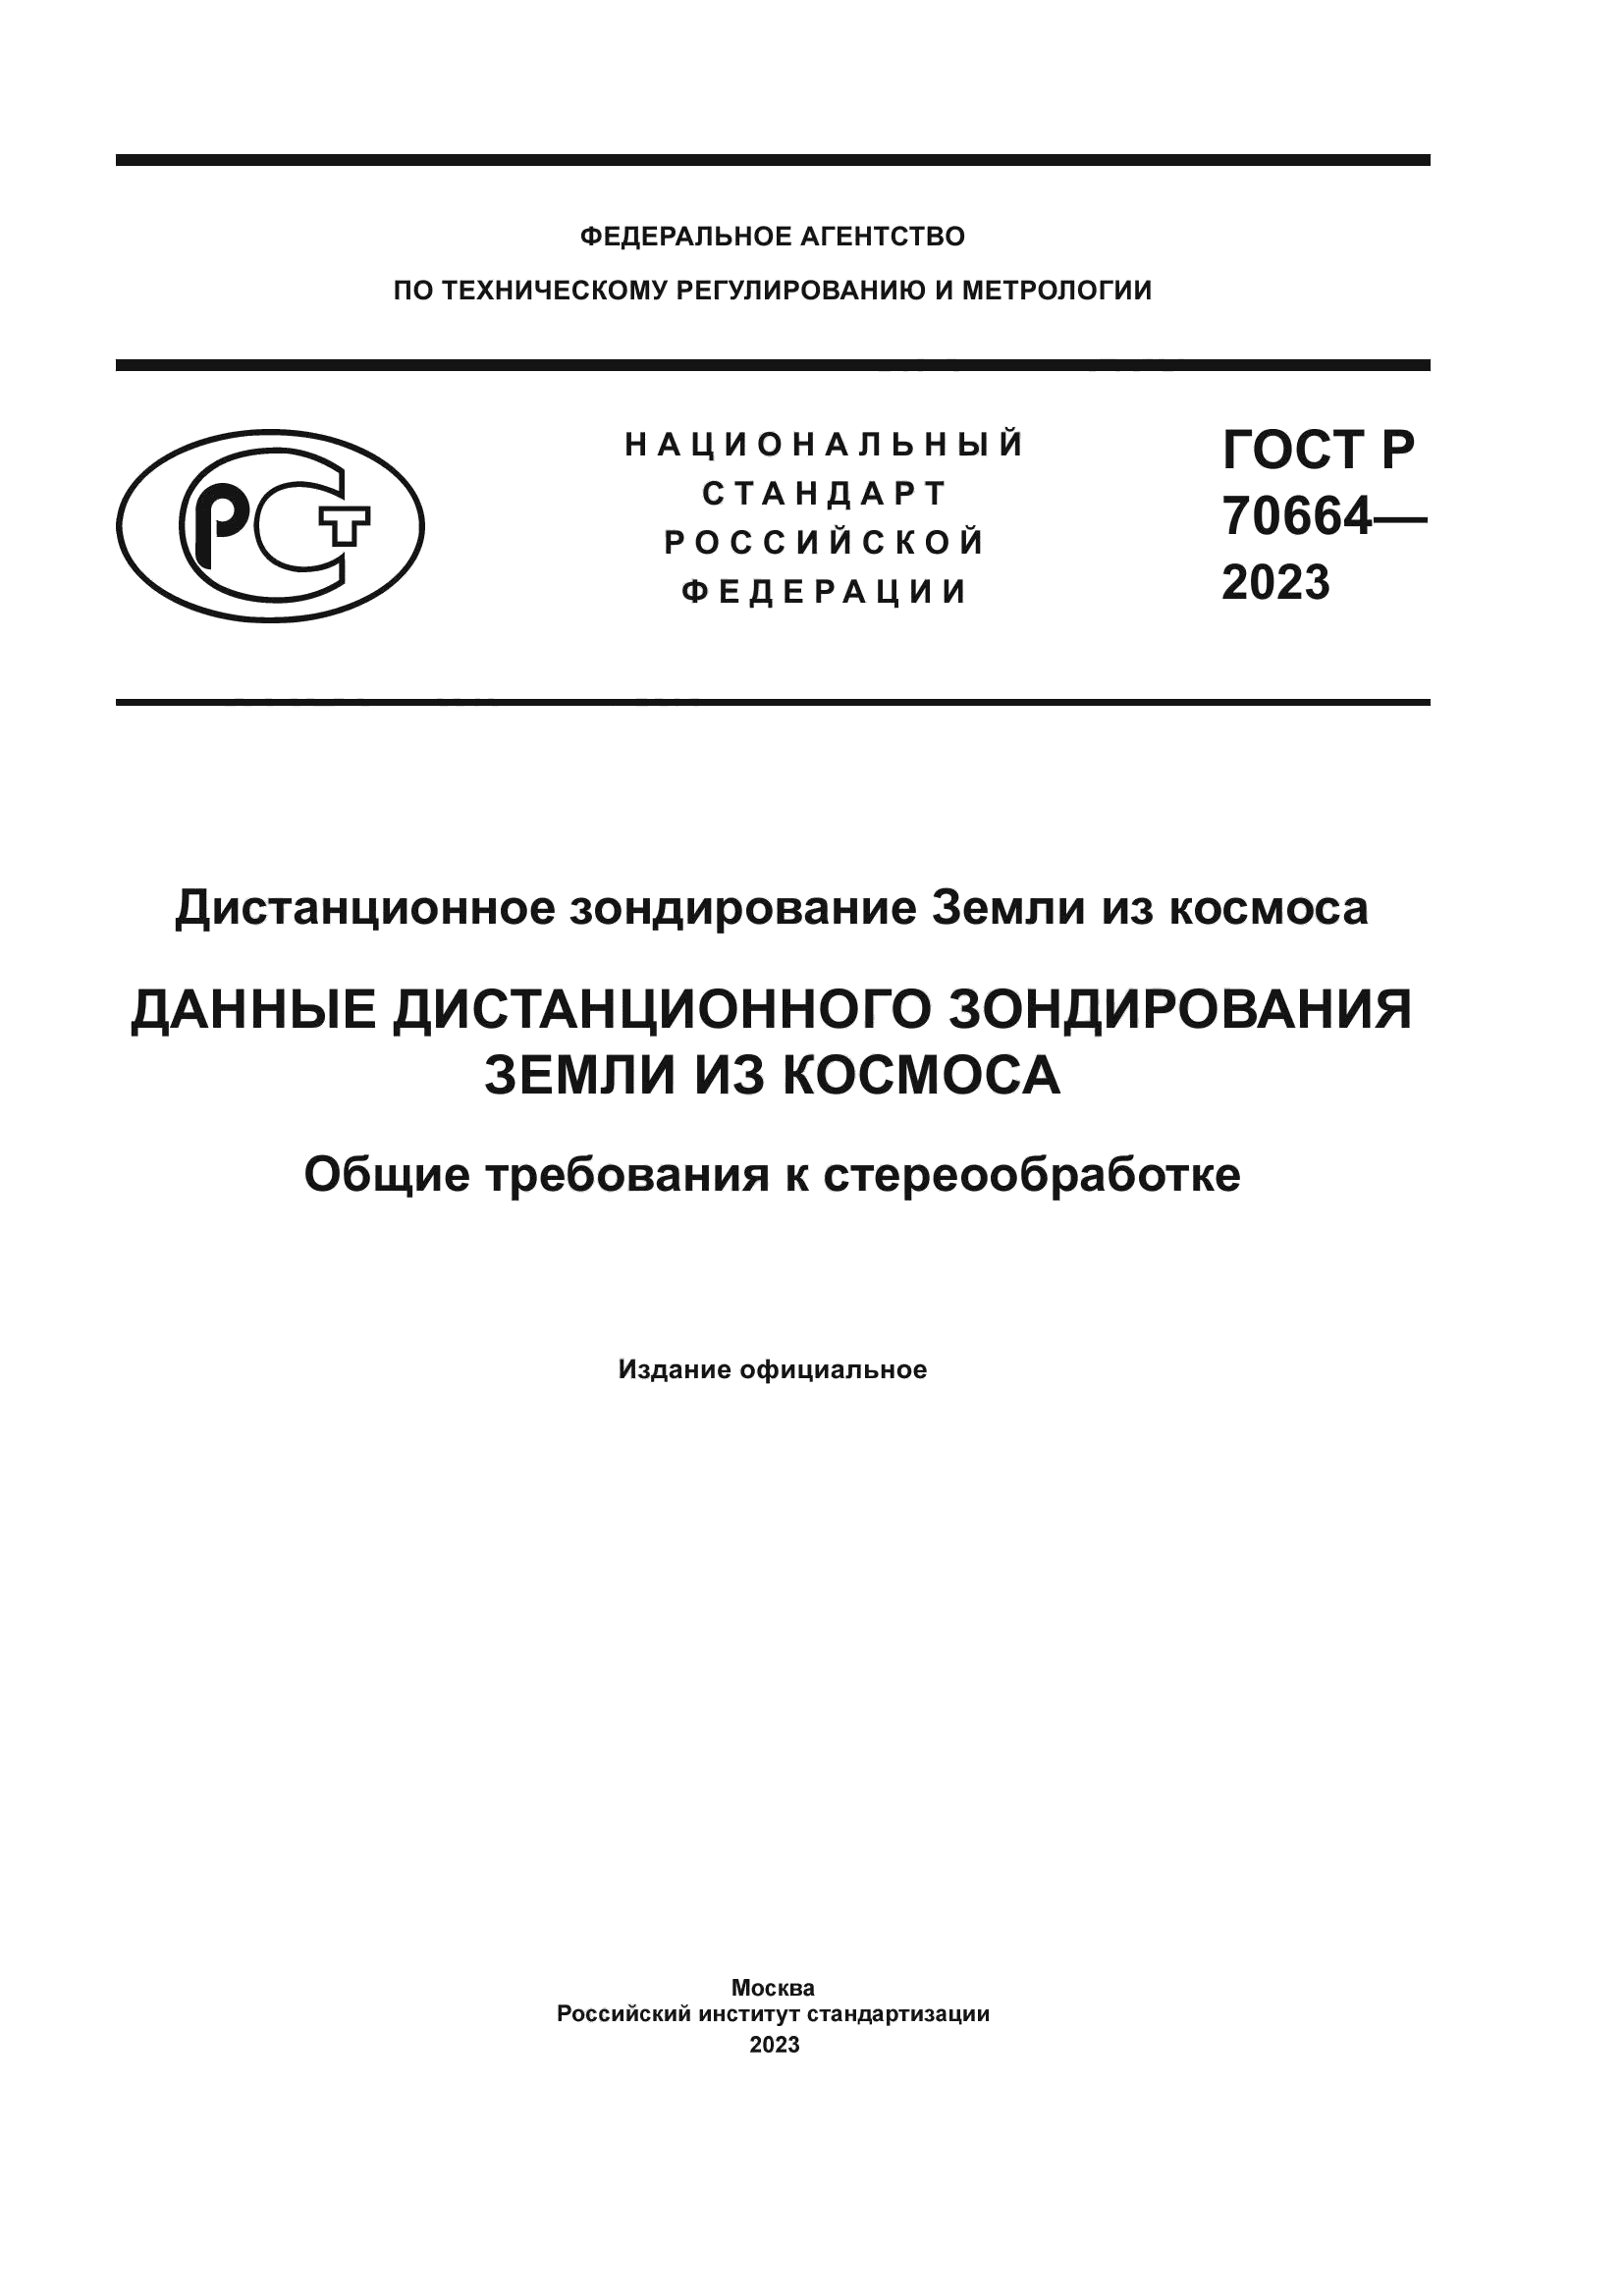 ГОСТ Р 70664-2023